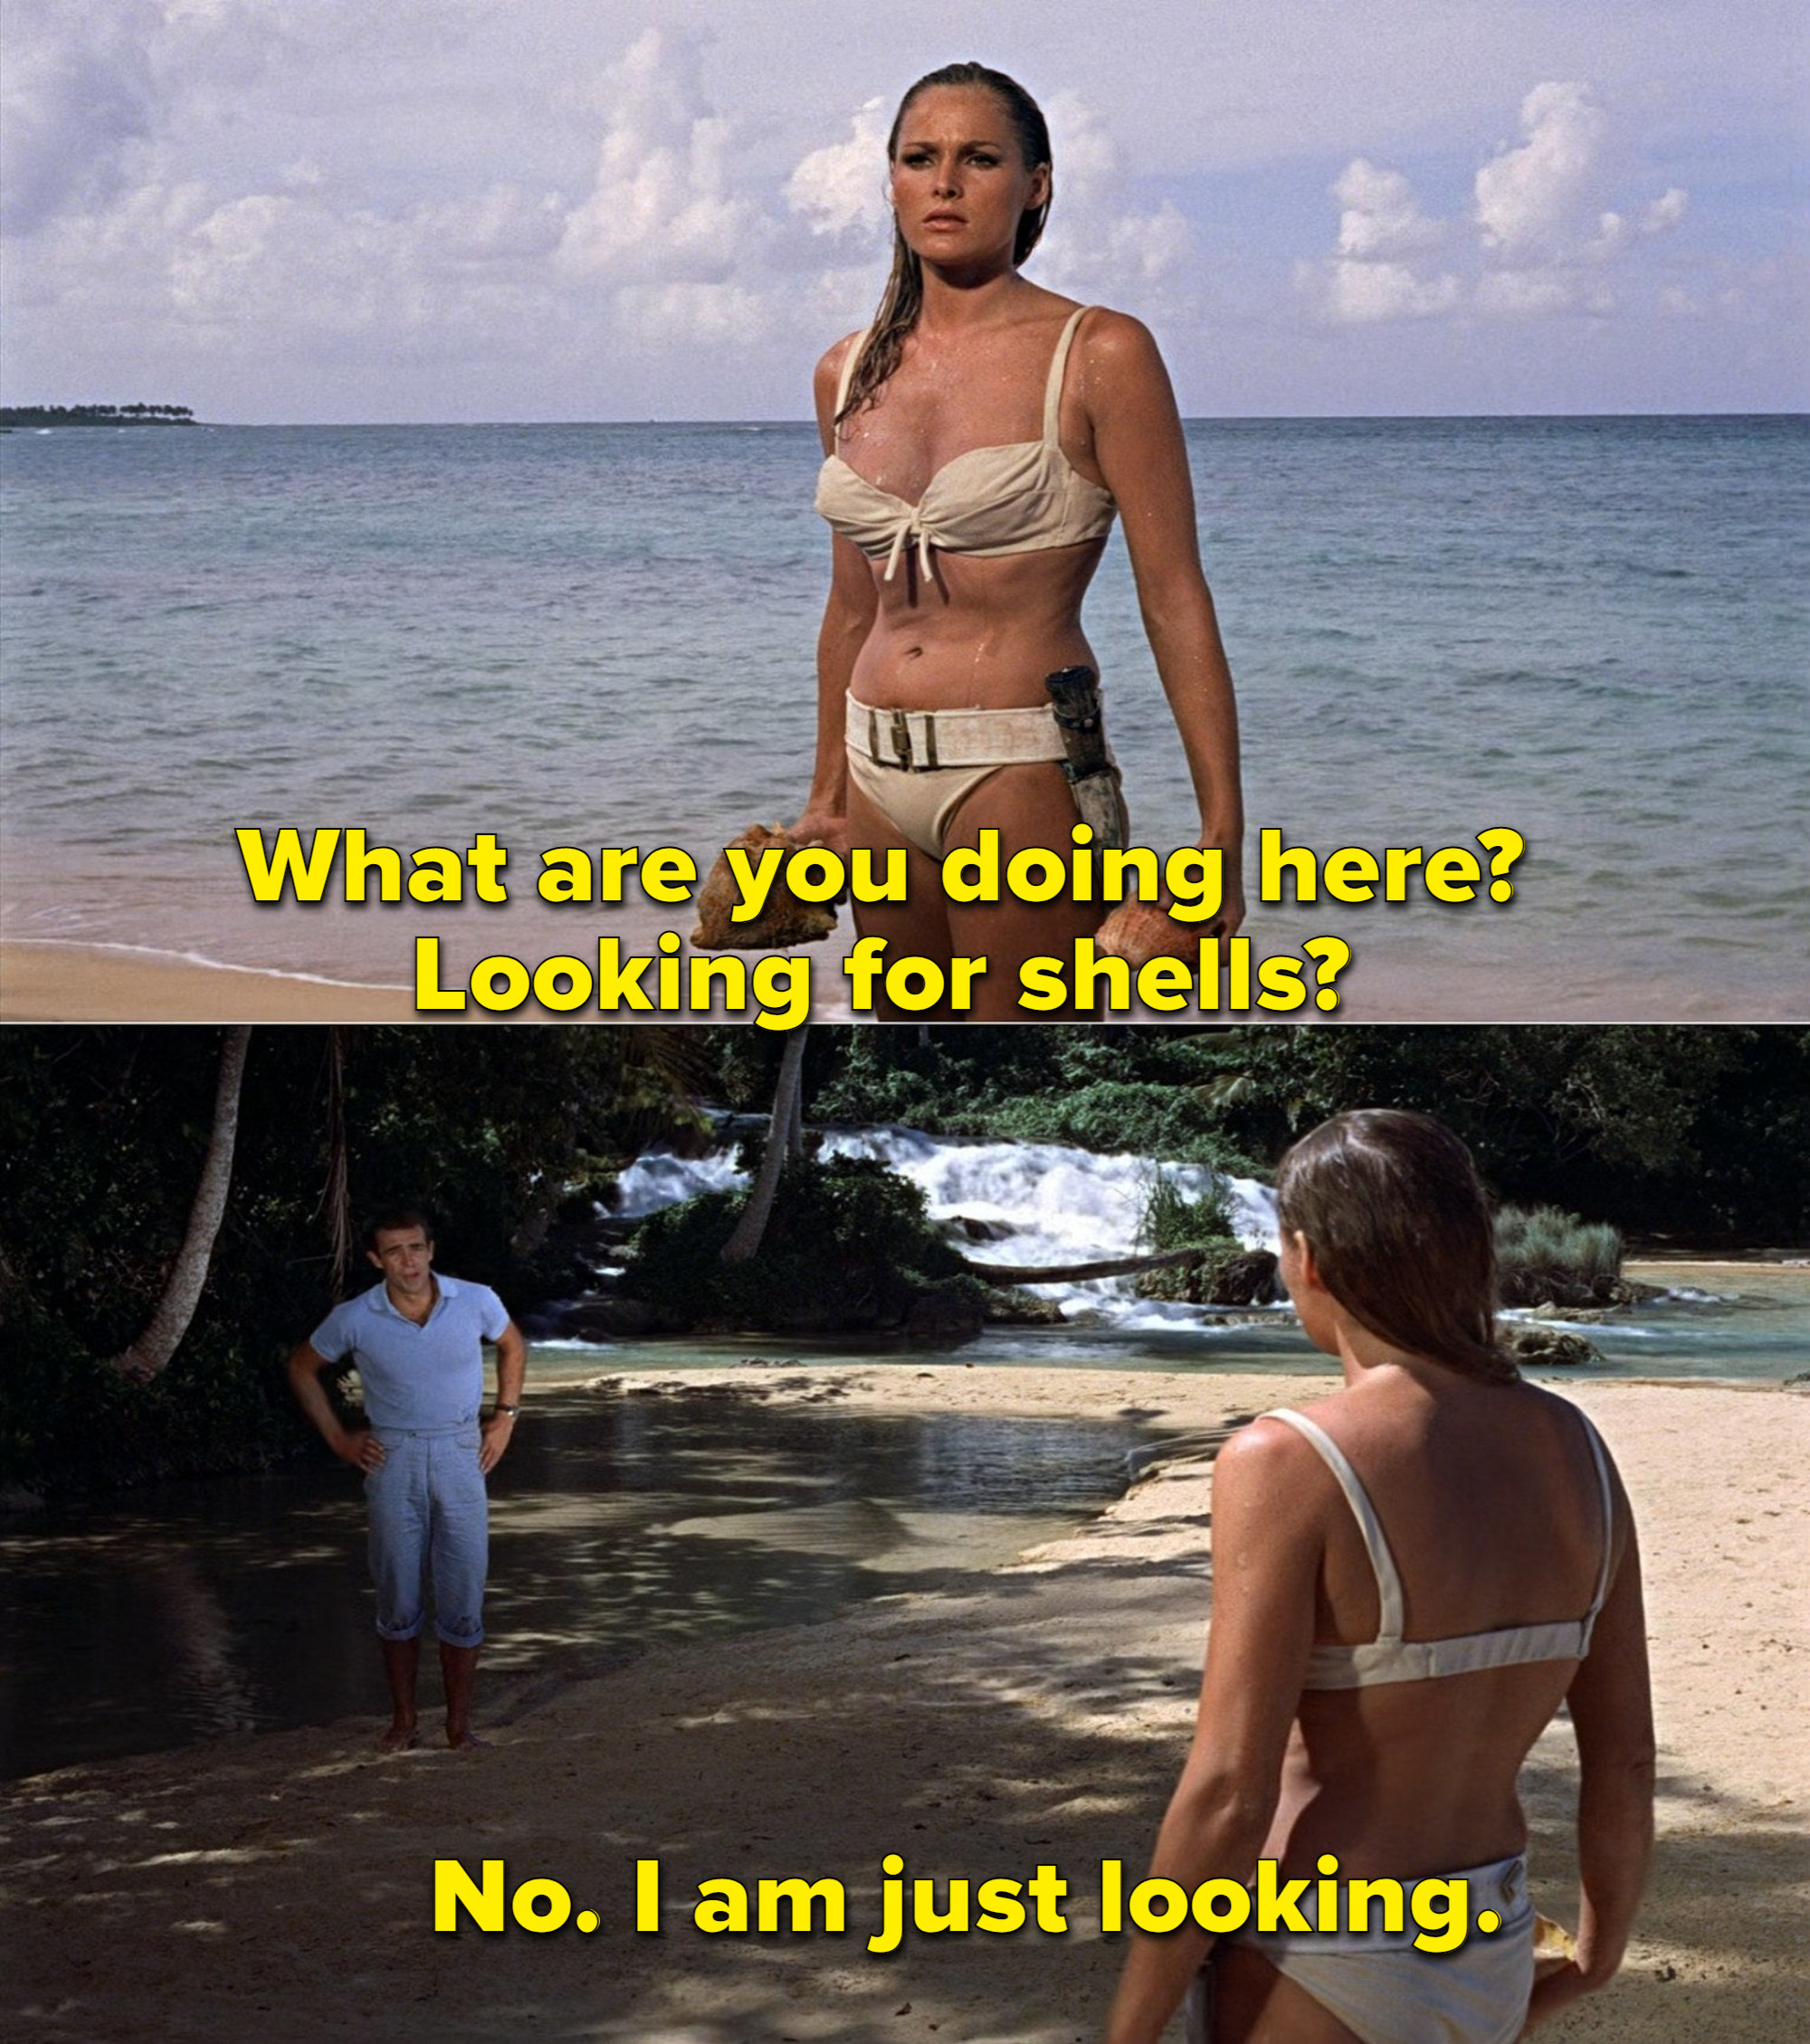 James Bond looks at a woman in a bikini holding sea shells